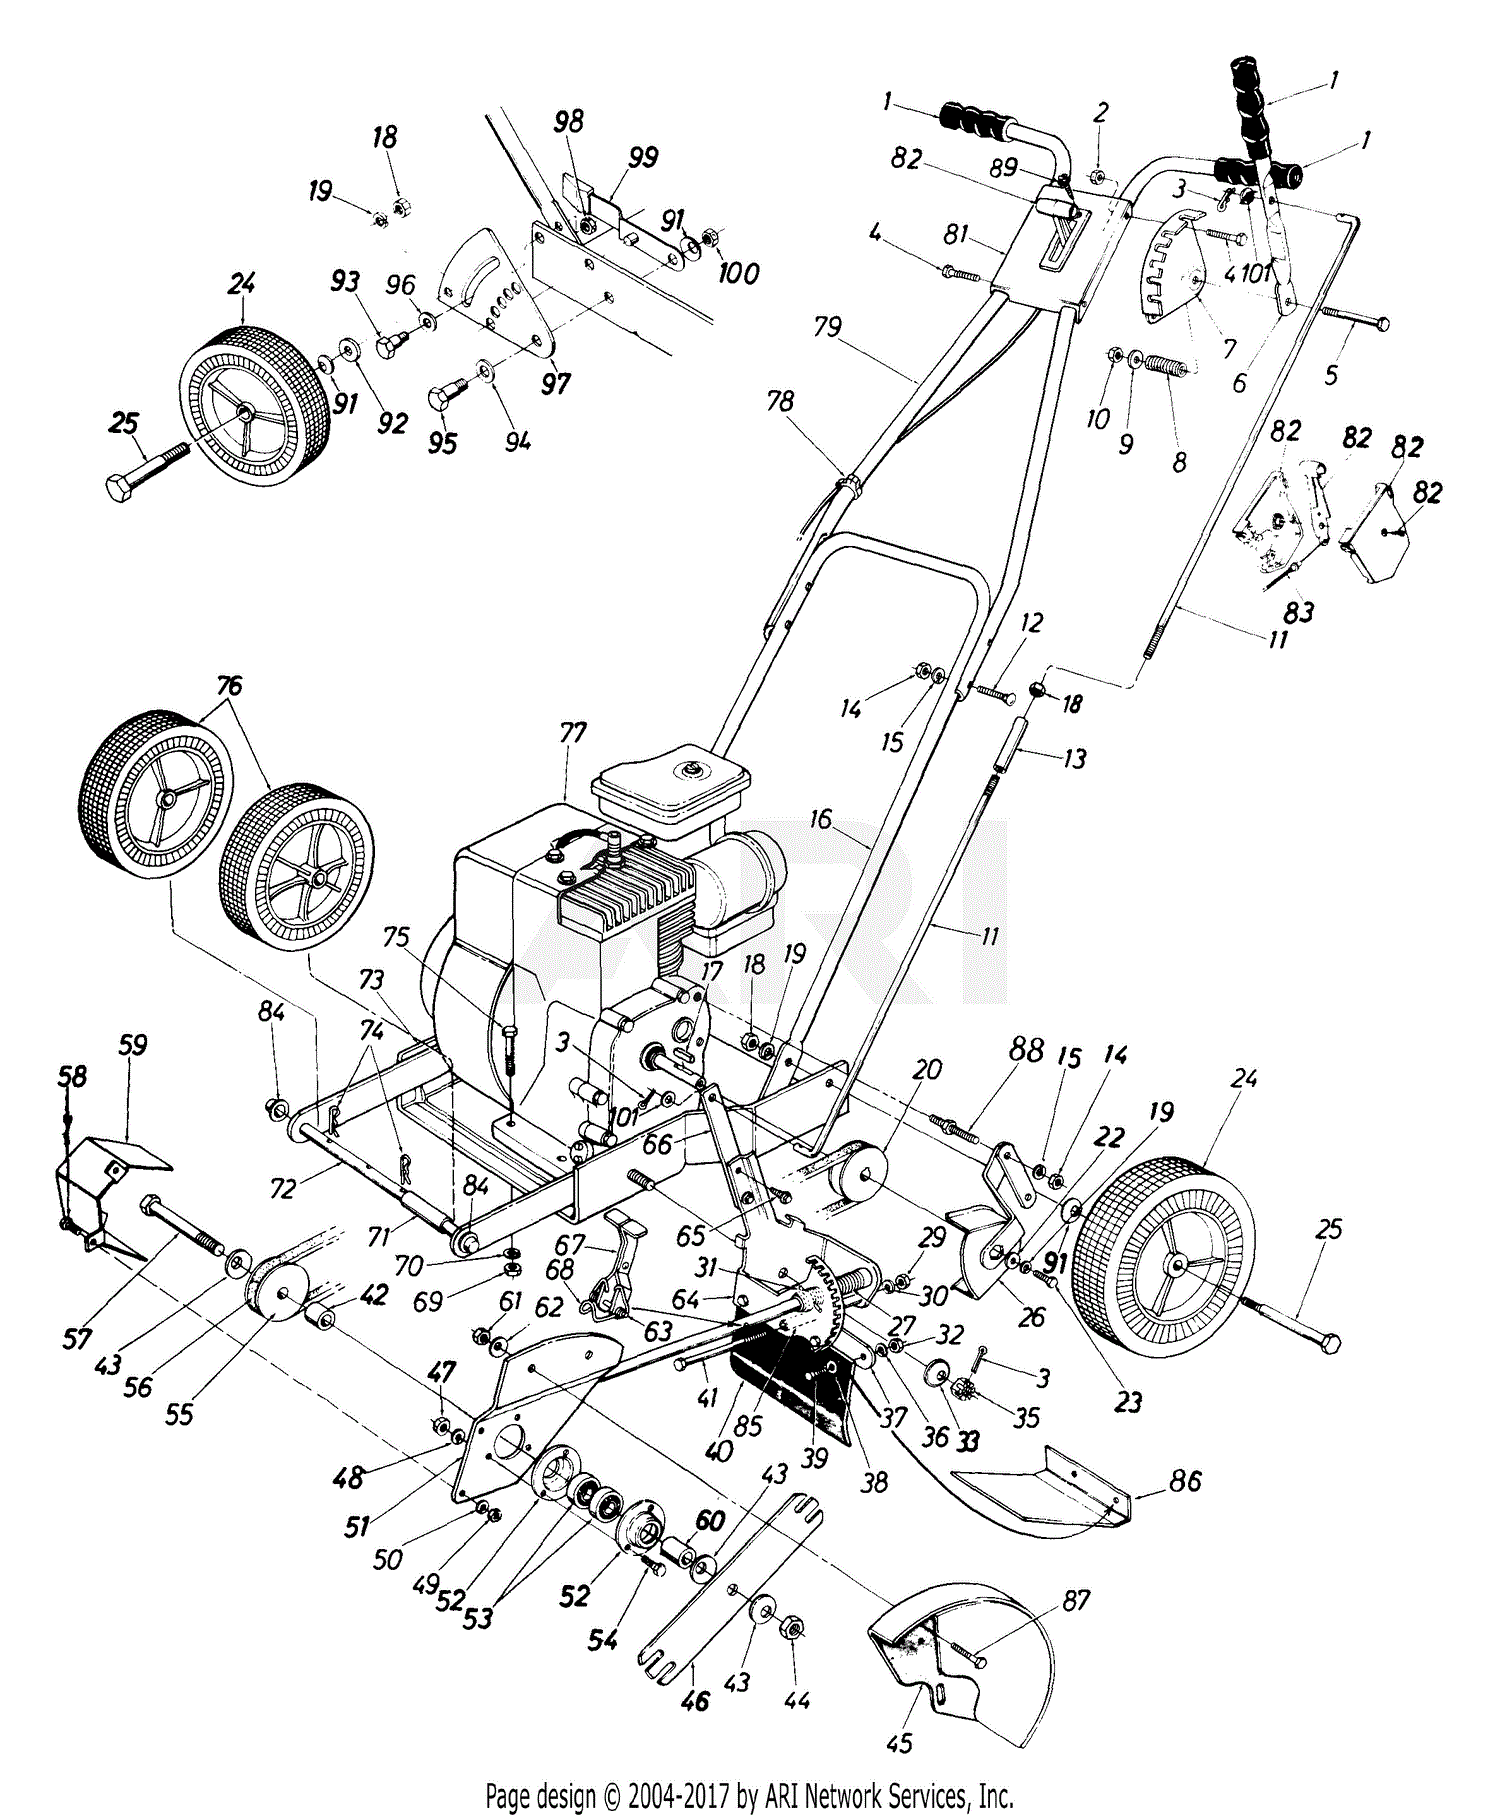 https://az417944.vo.msecnd.net/diagrams/manufacturer/cub-cadet/white-outdoor/1992-models/chore-performers-1992/252-586-190-3-hp-edger-1992/edger/diagram.gif